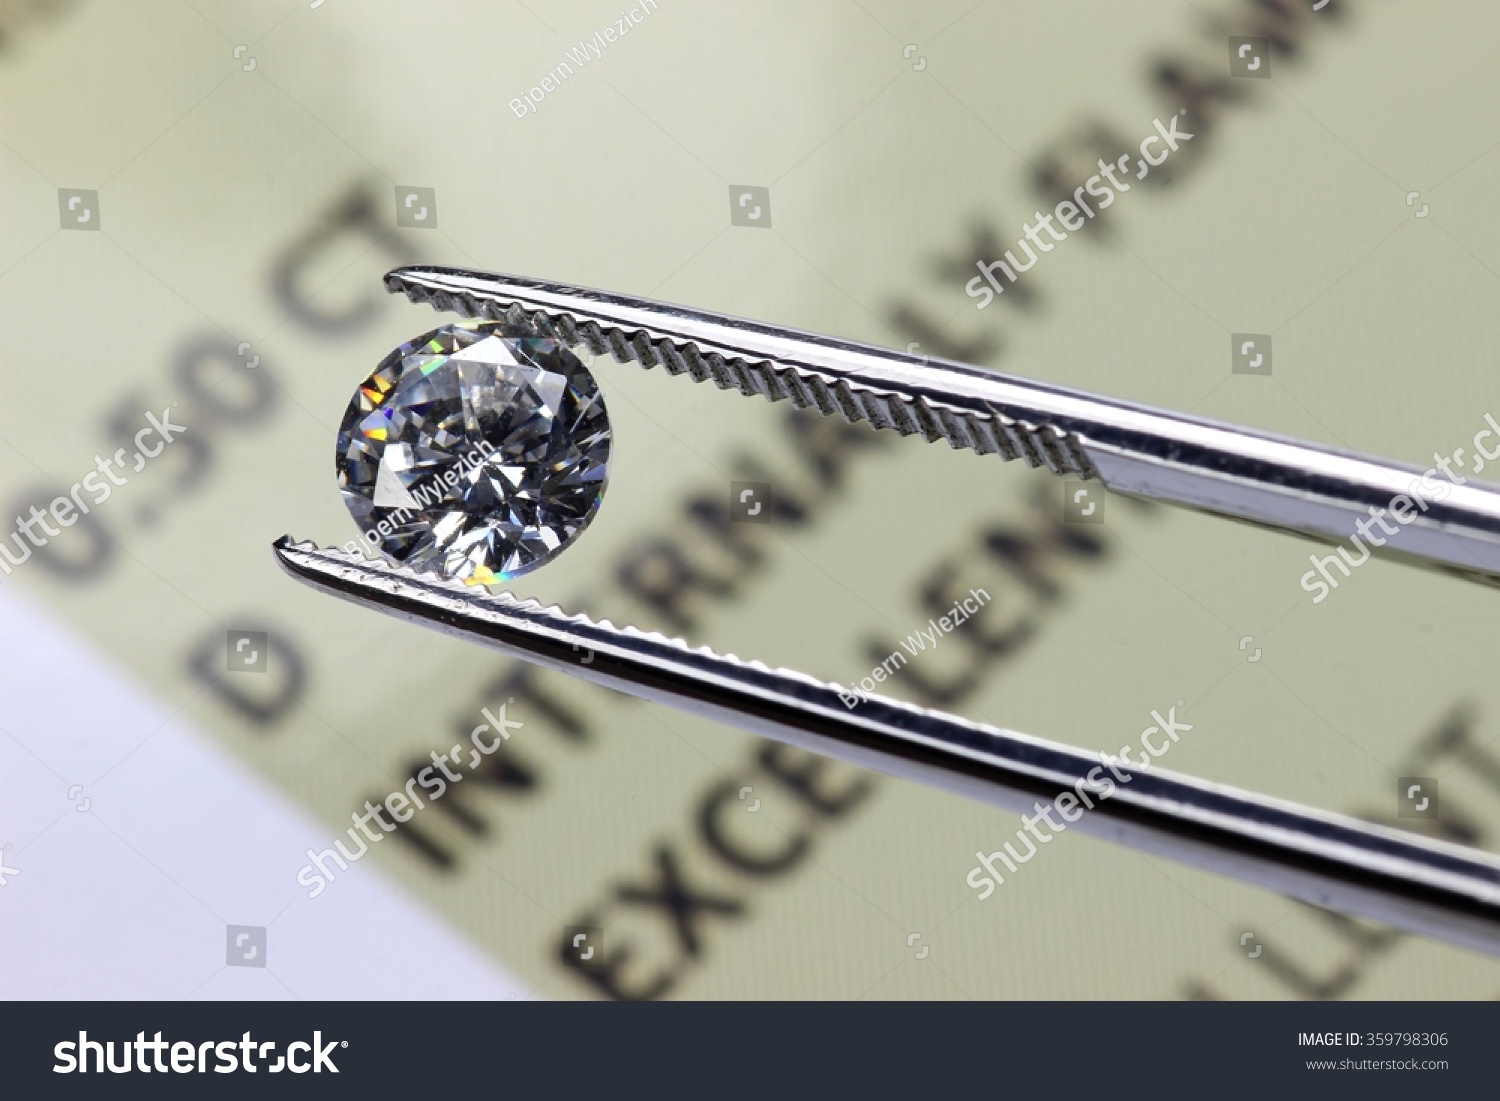 cut diamond held by tweezers above certificate #359798306